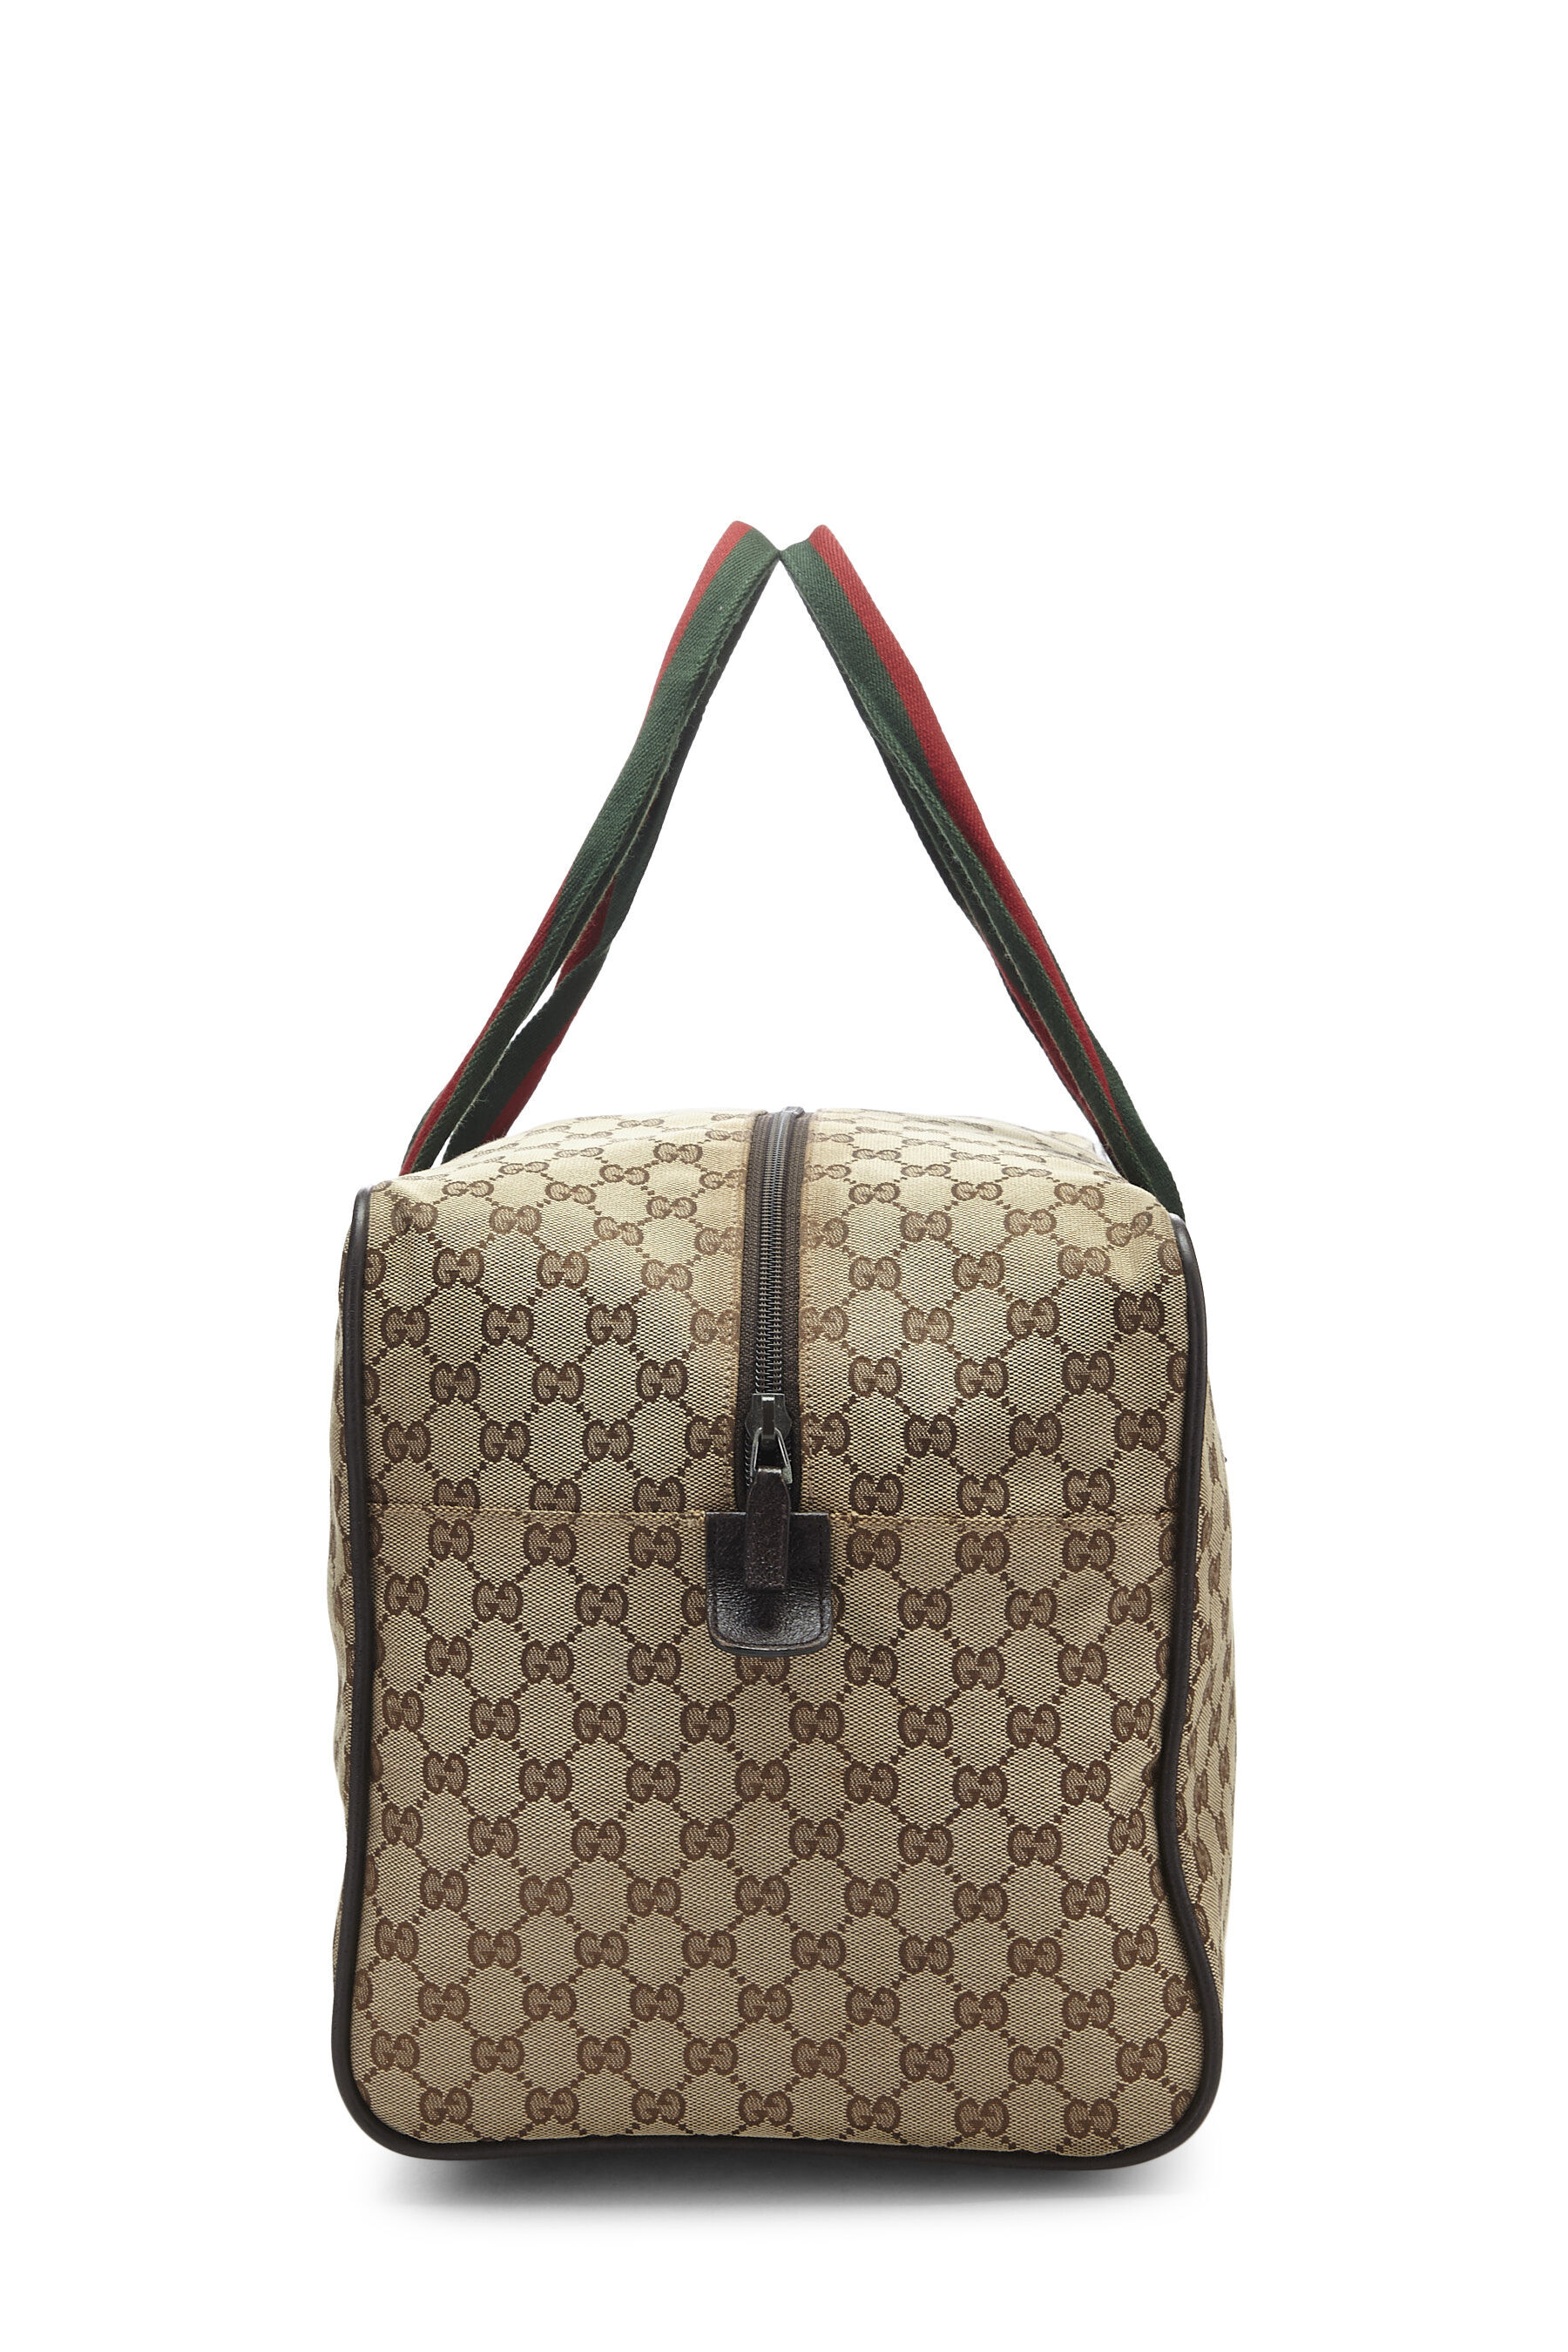 Gucci Duffle Travel Militare GG Beige Ebony Tmoro Bag Handbag Italy New